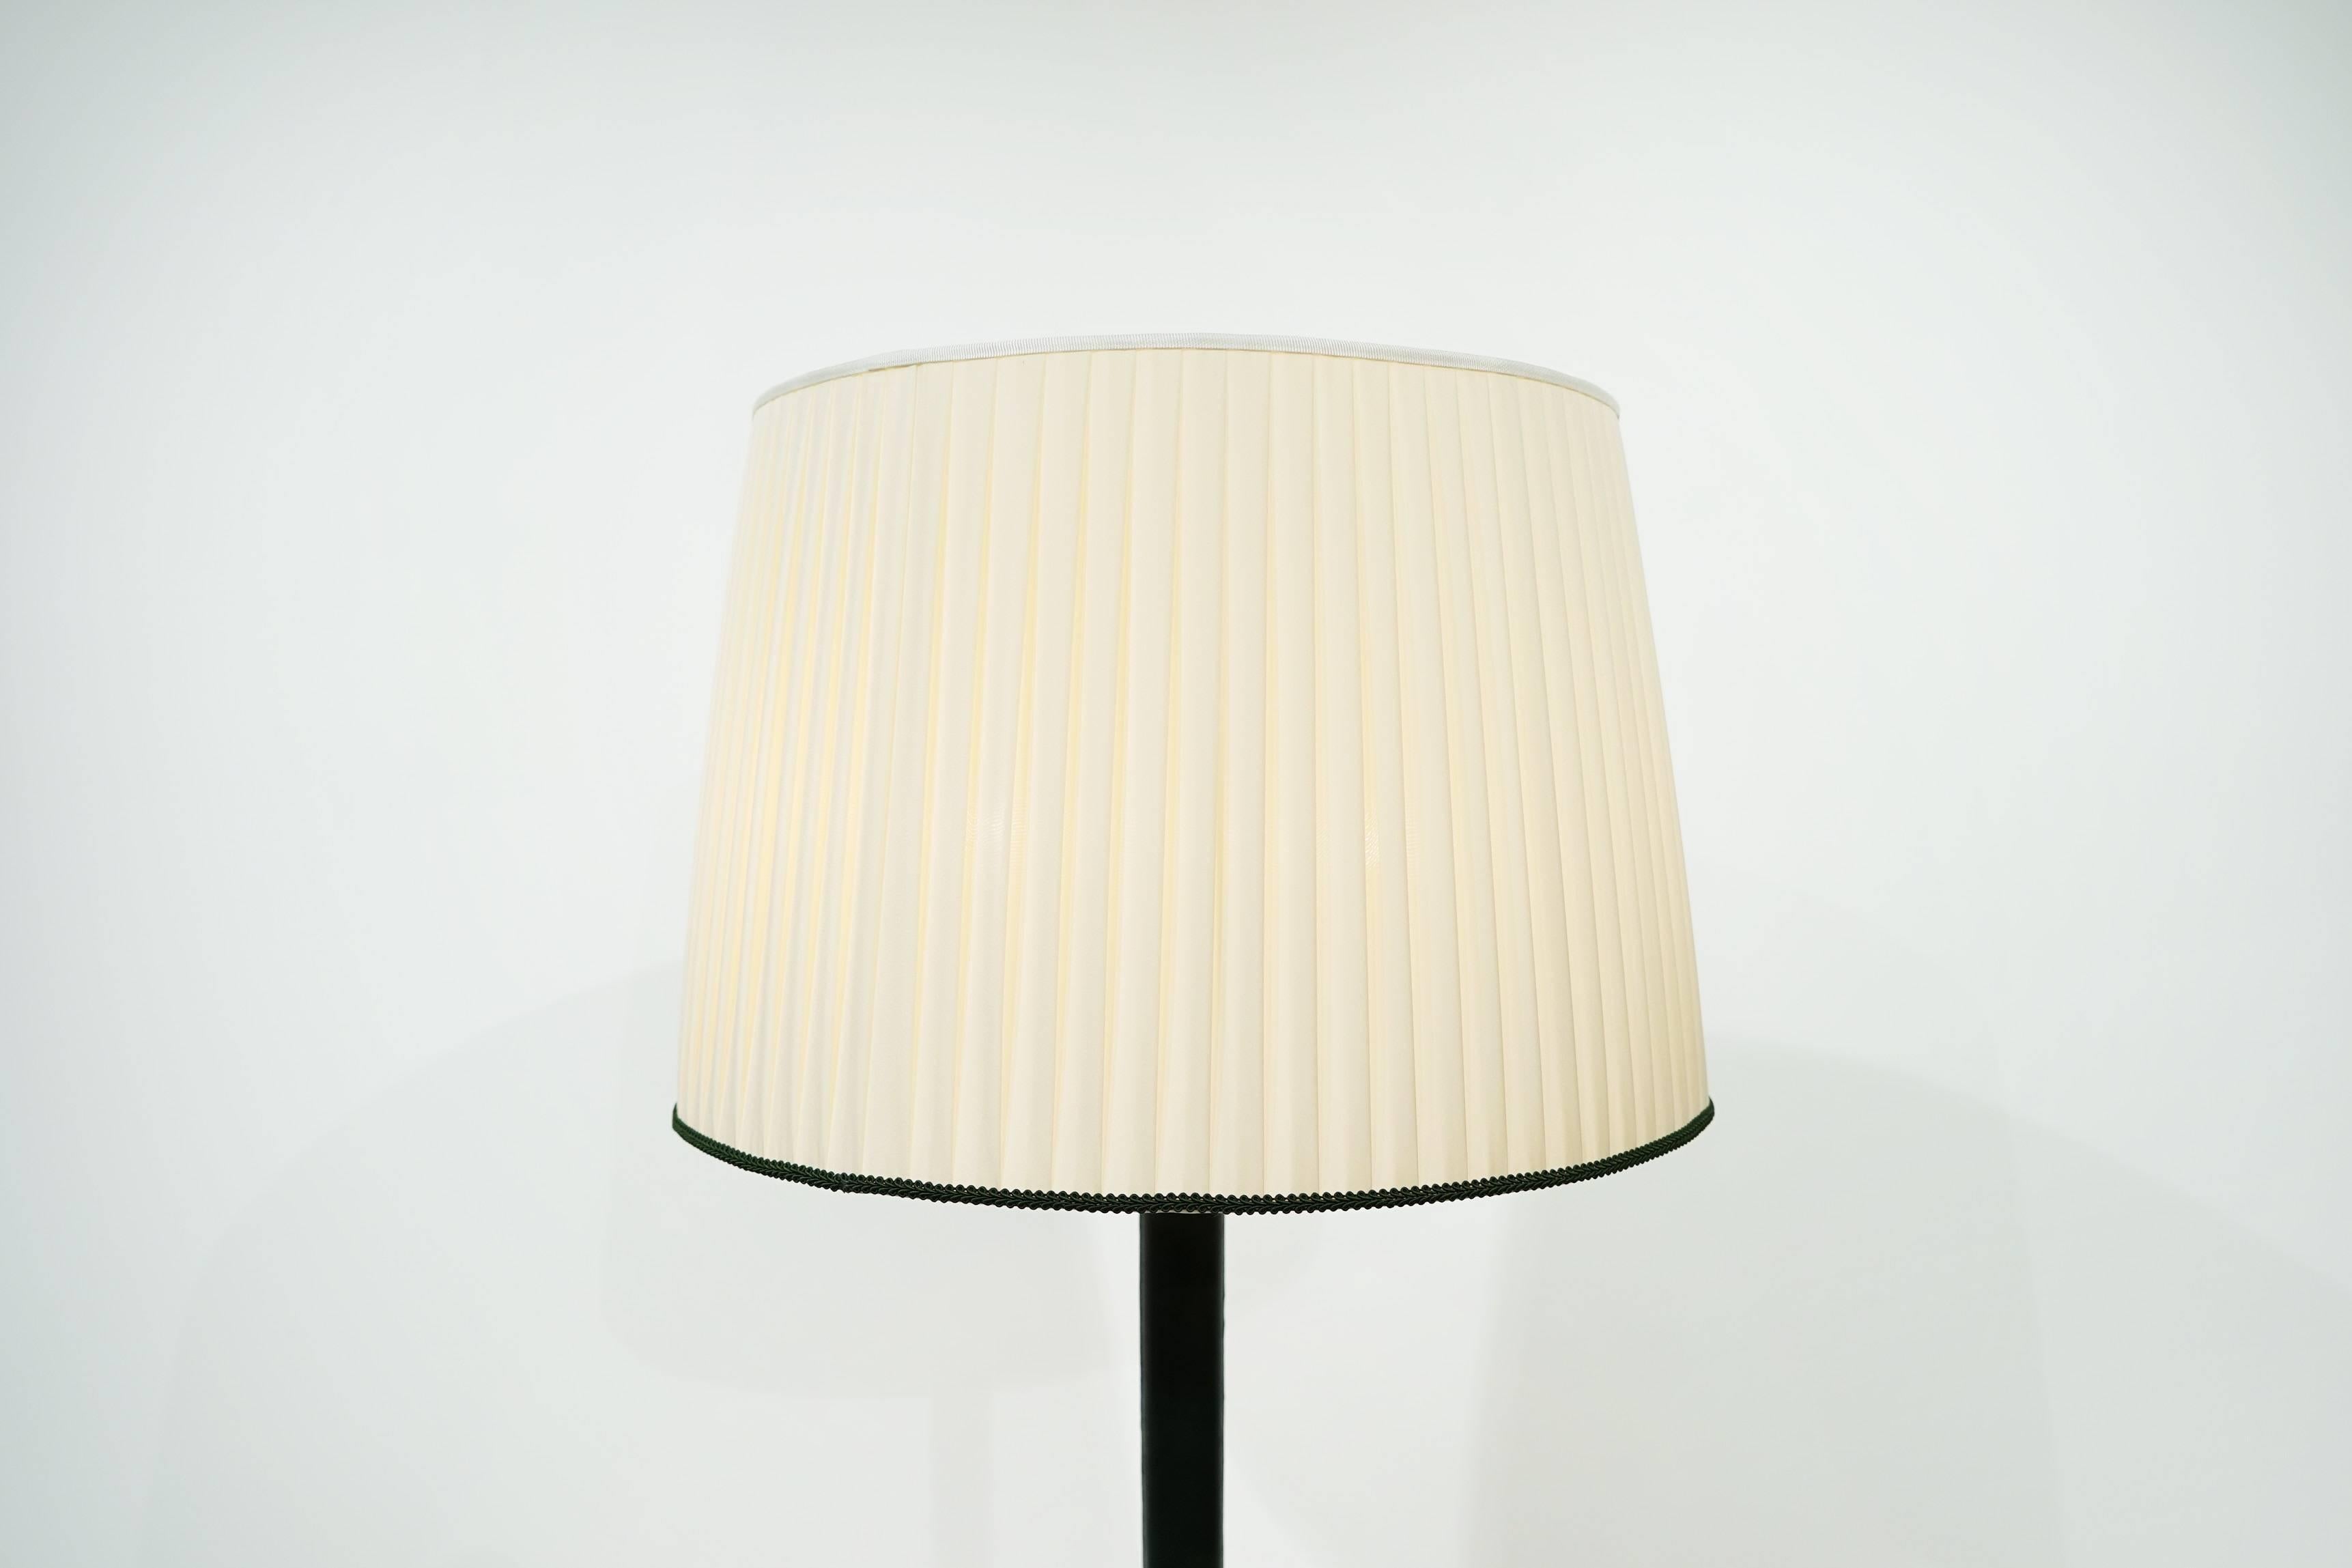 Floor lamp attributed to Gino Sarfatti, Italy, circa 1950,
unknown designer.